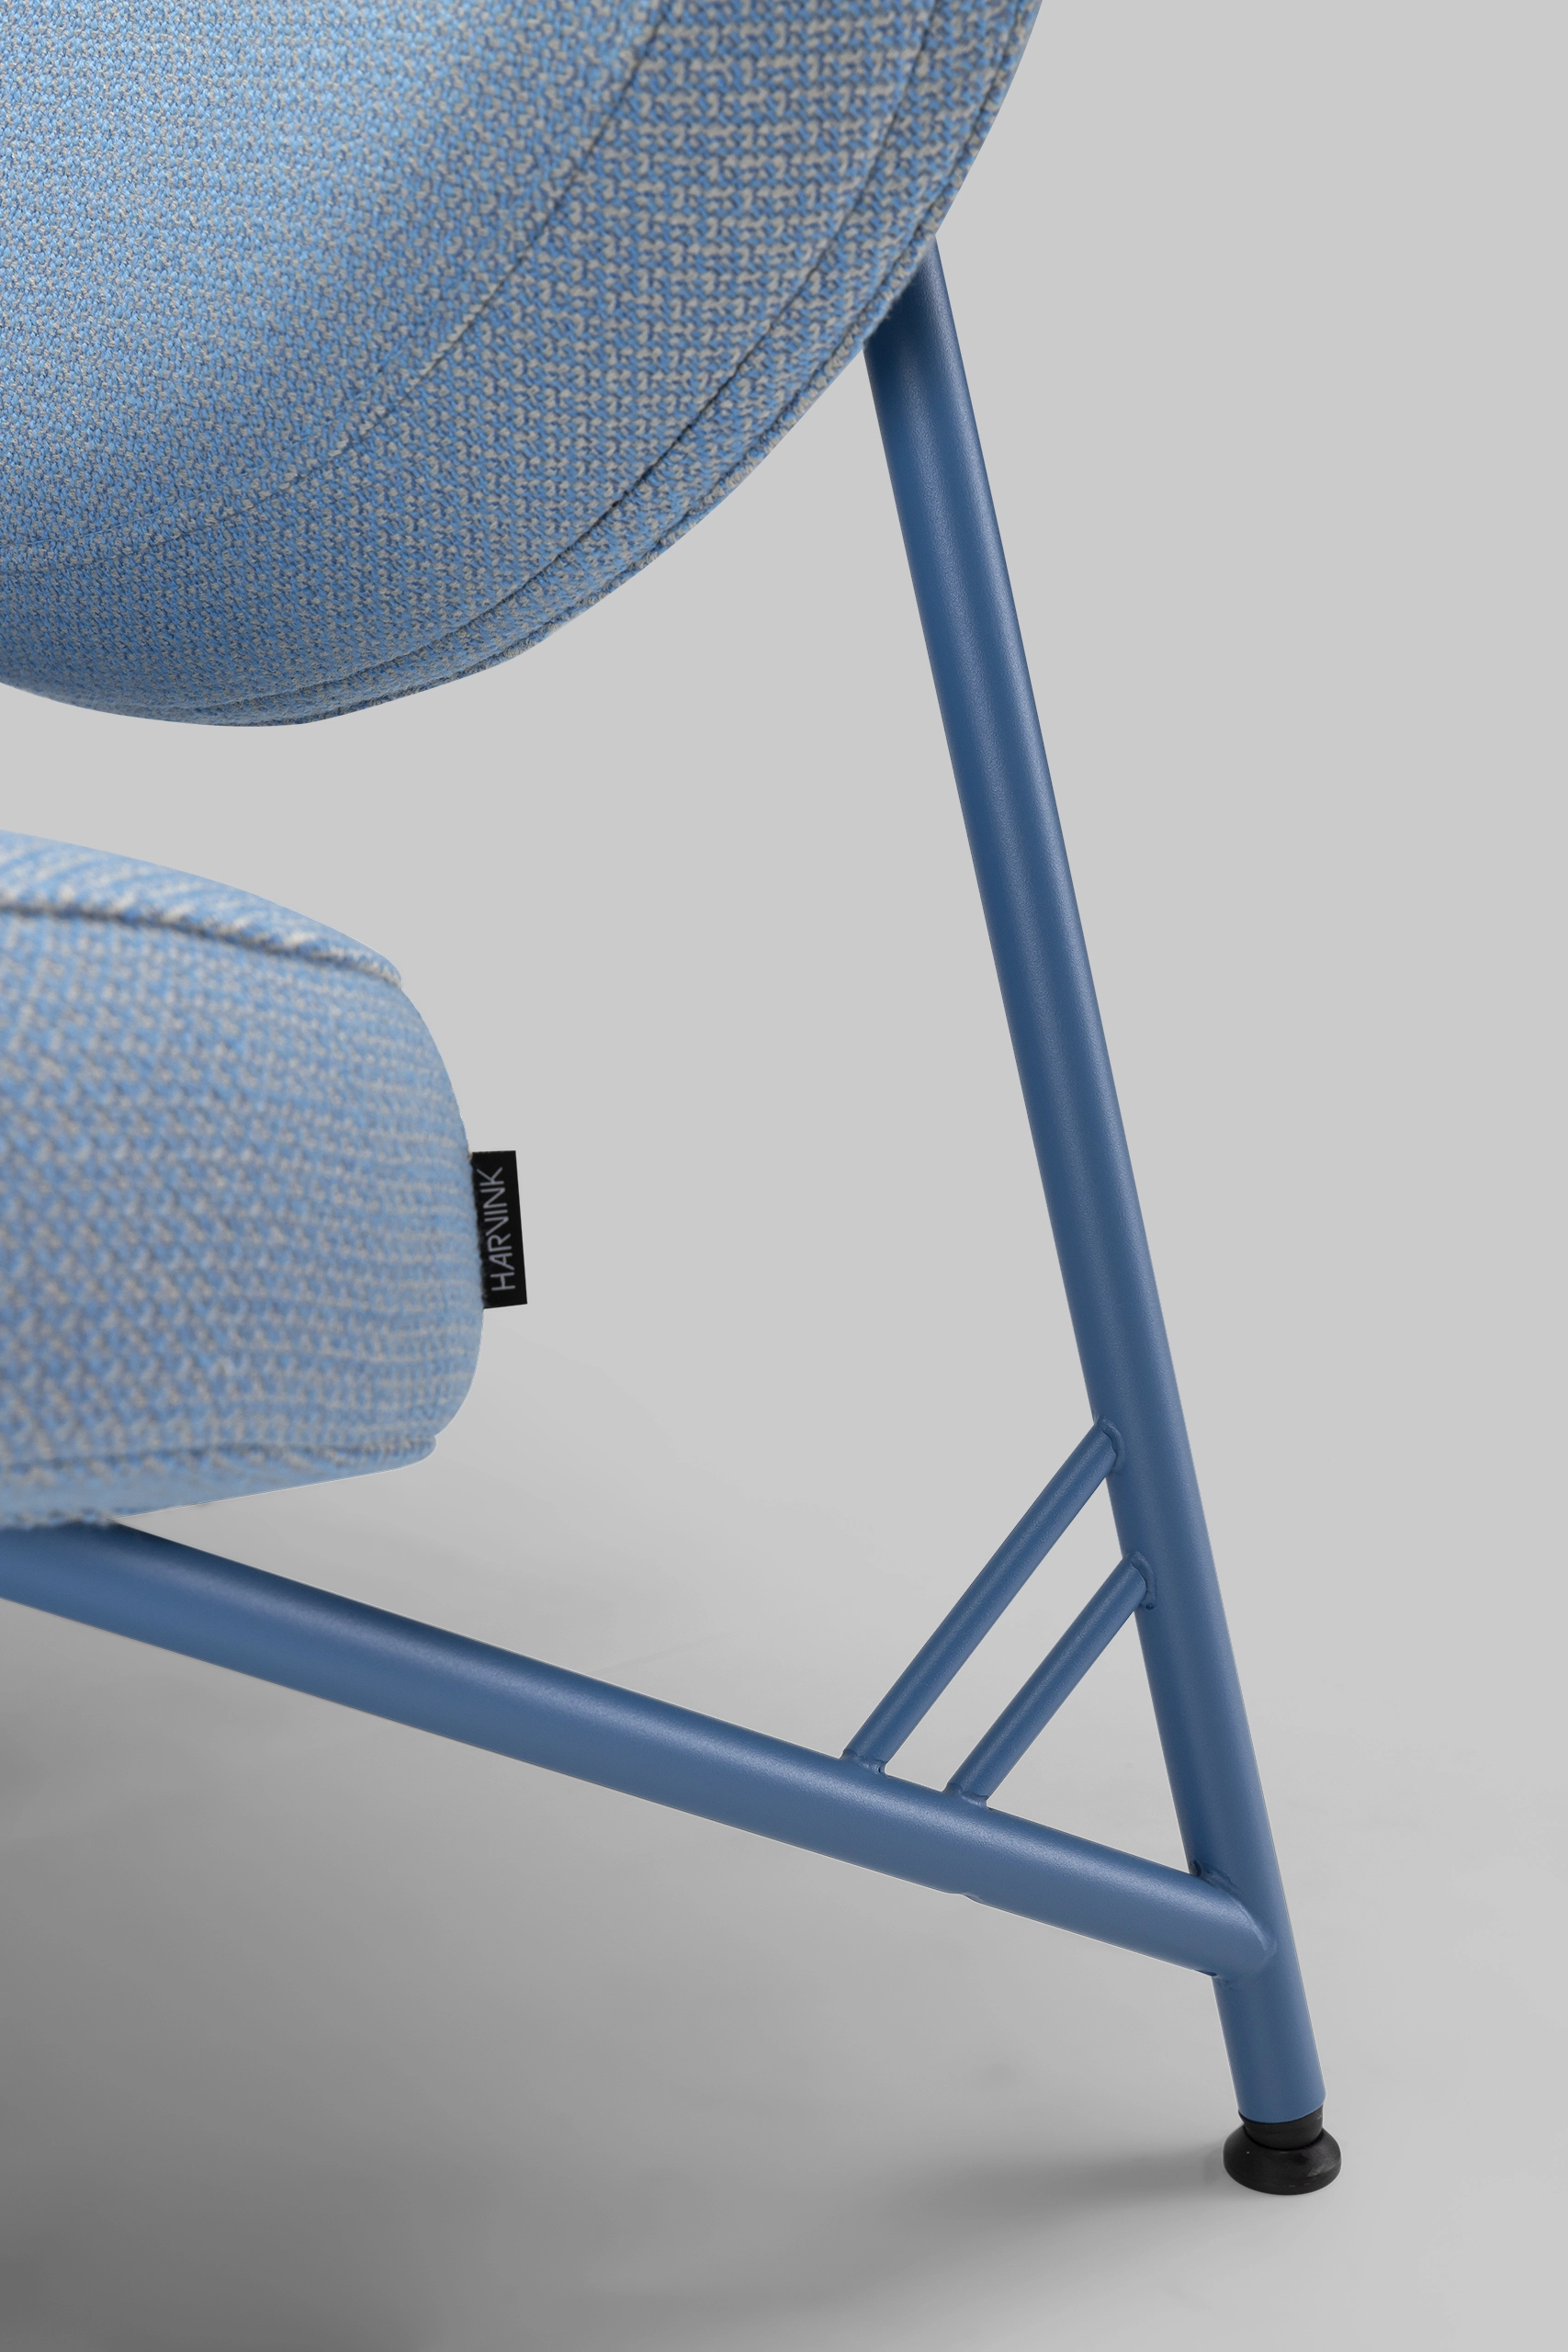 Harvink fauteuil Tipi in stof Cleo blauw met frame RAL 5007 briljant blauw